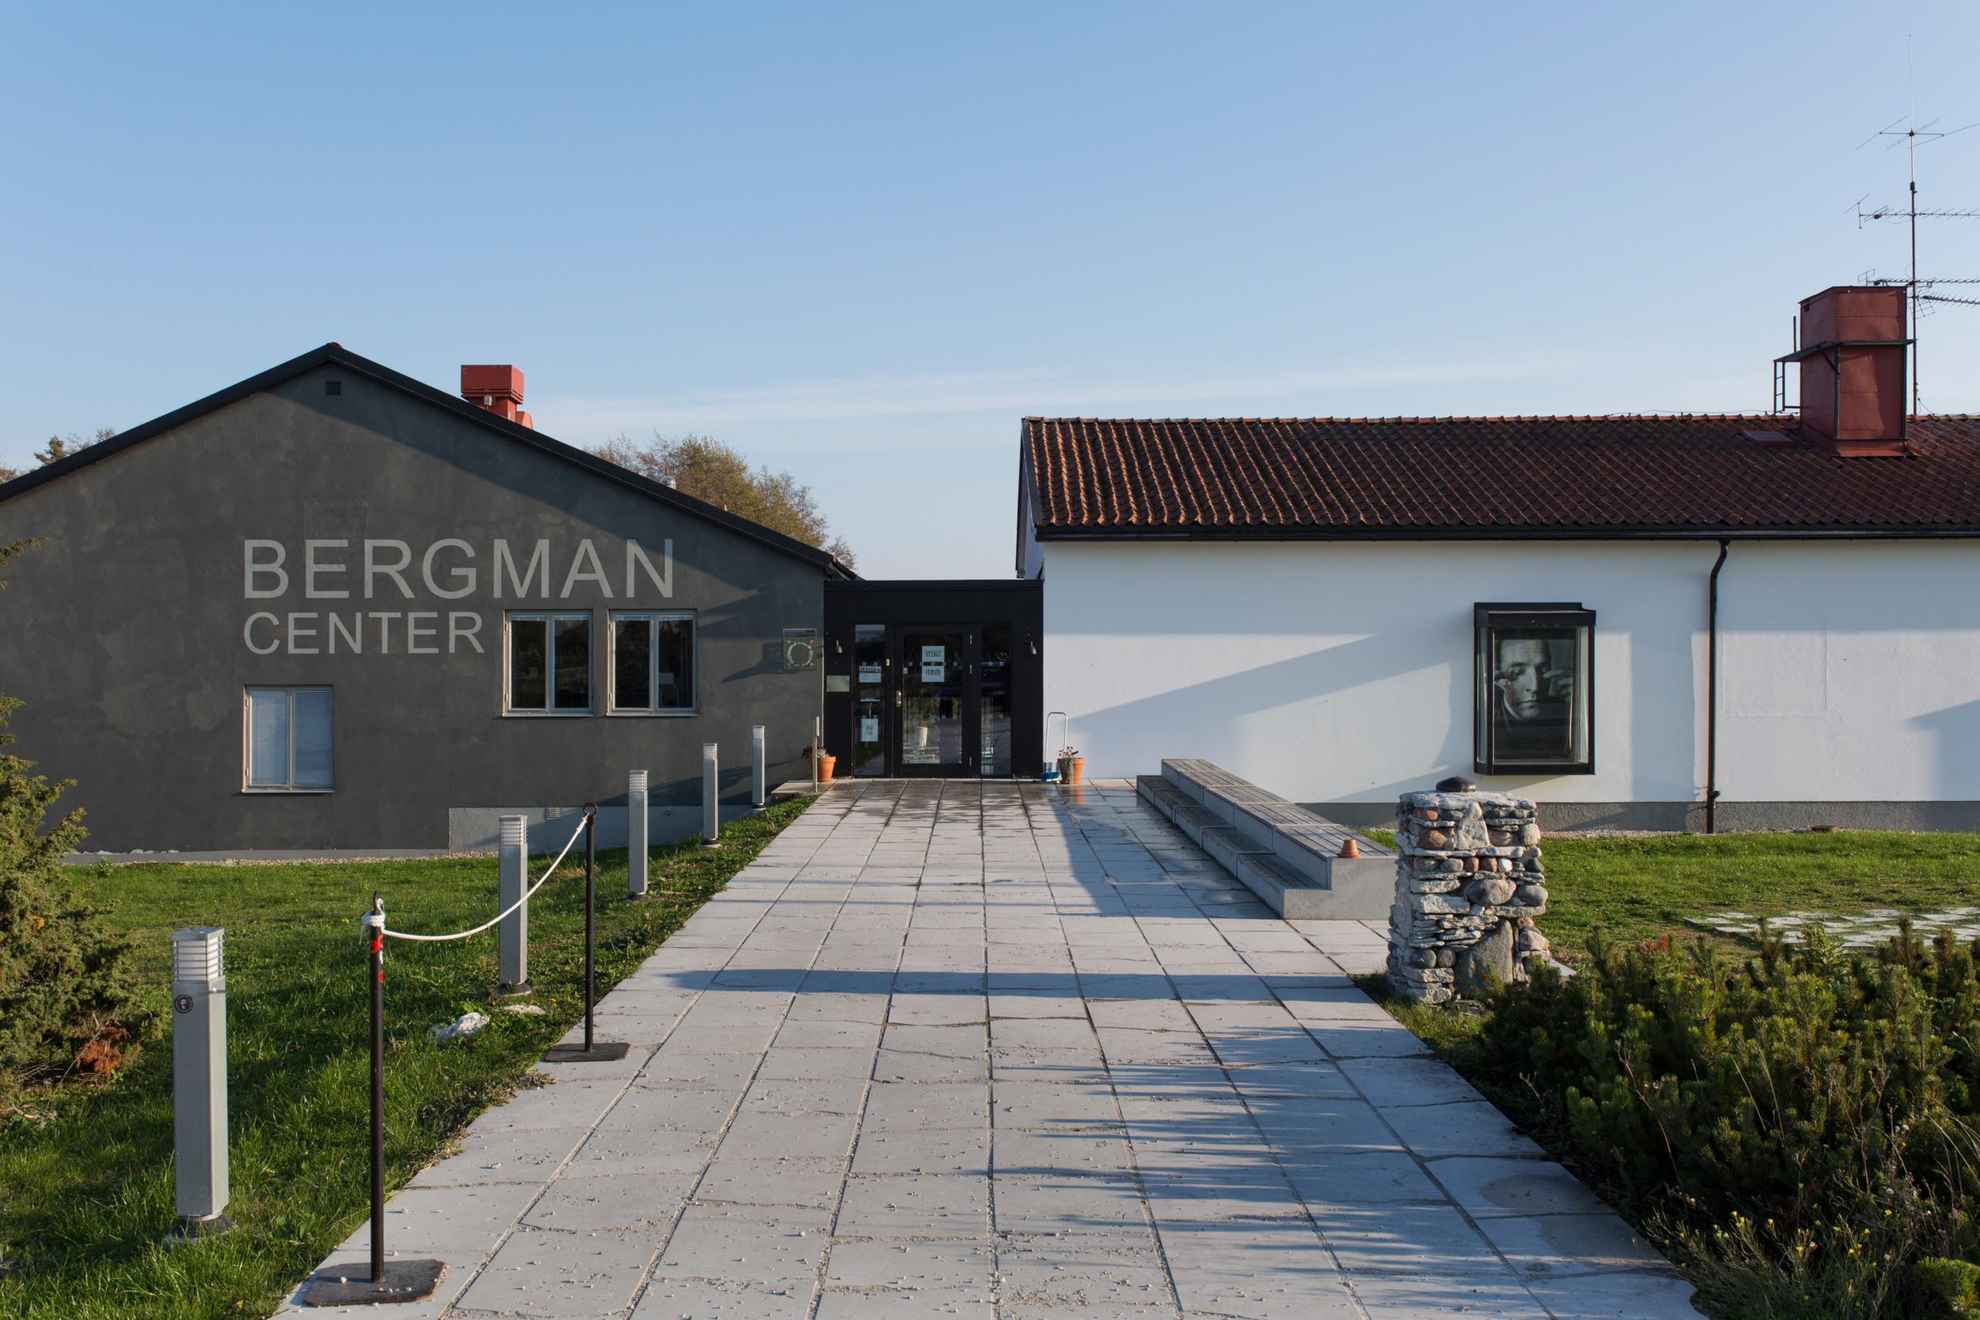 The Bergman Center